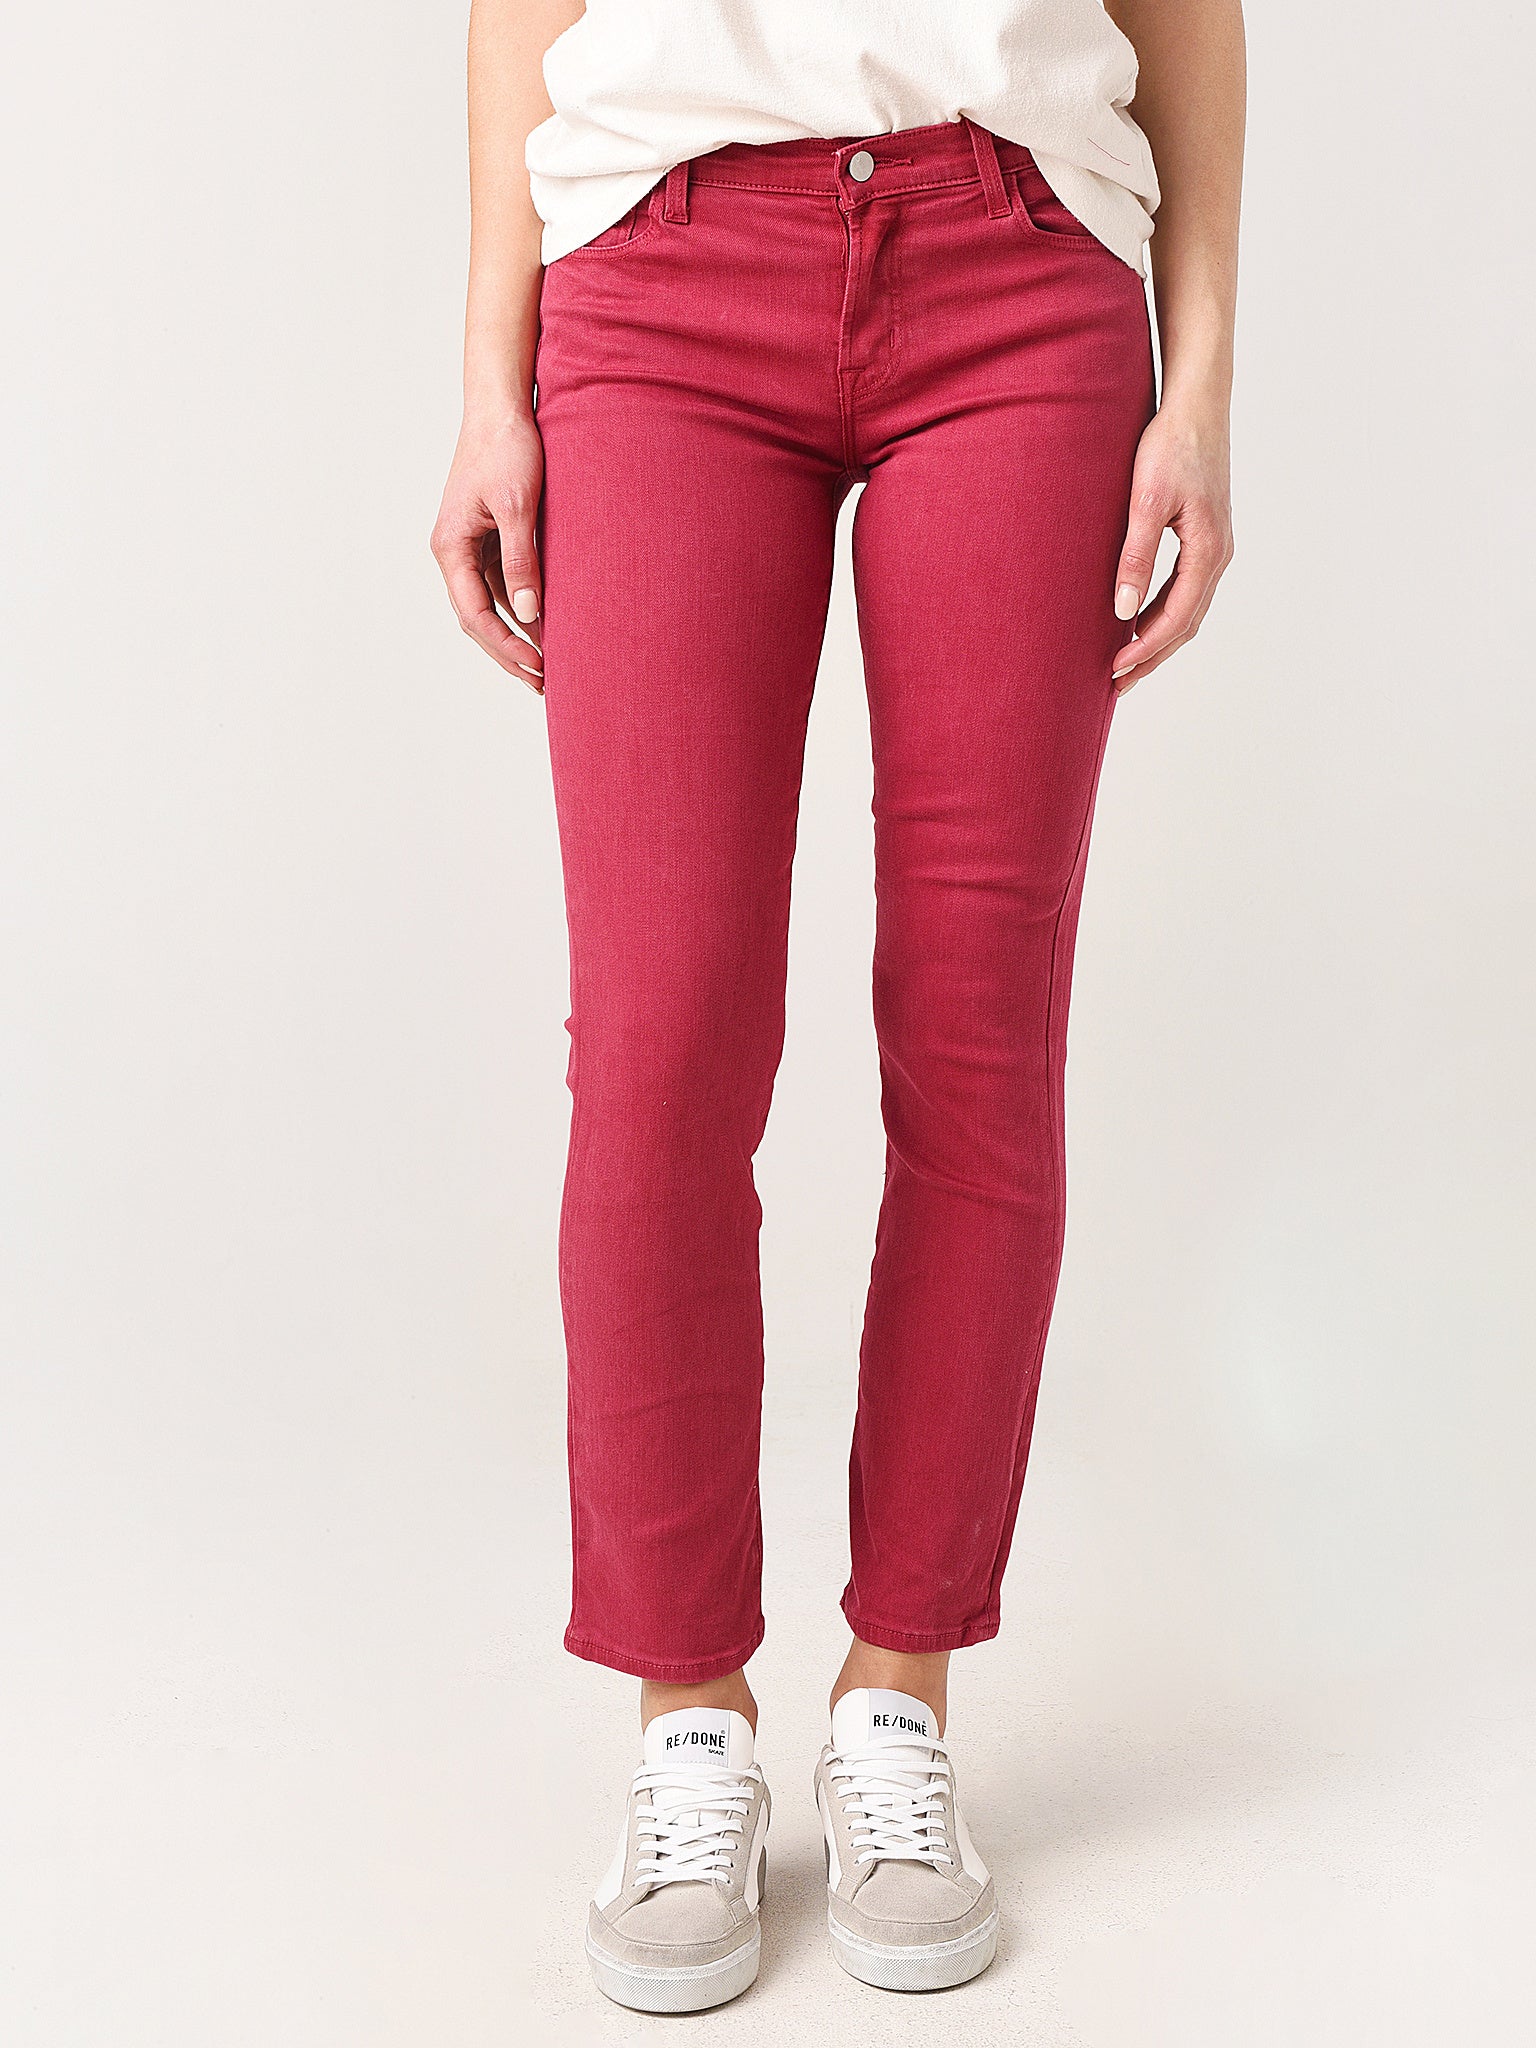 J Brand Red Skinny Jeans